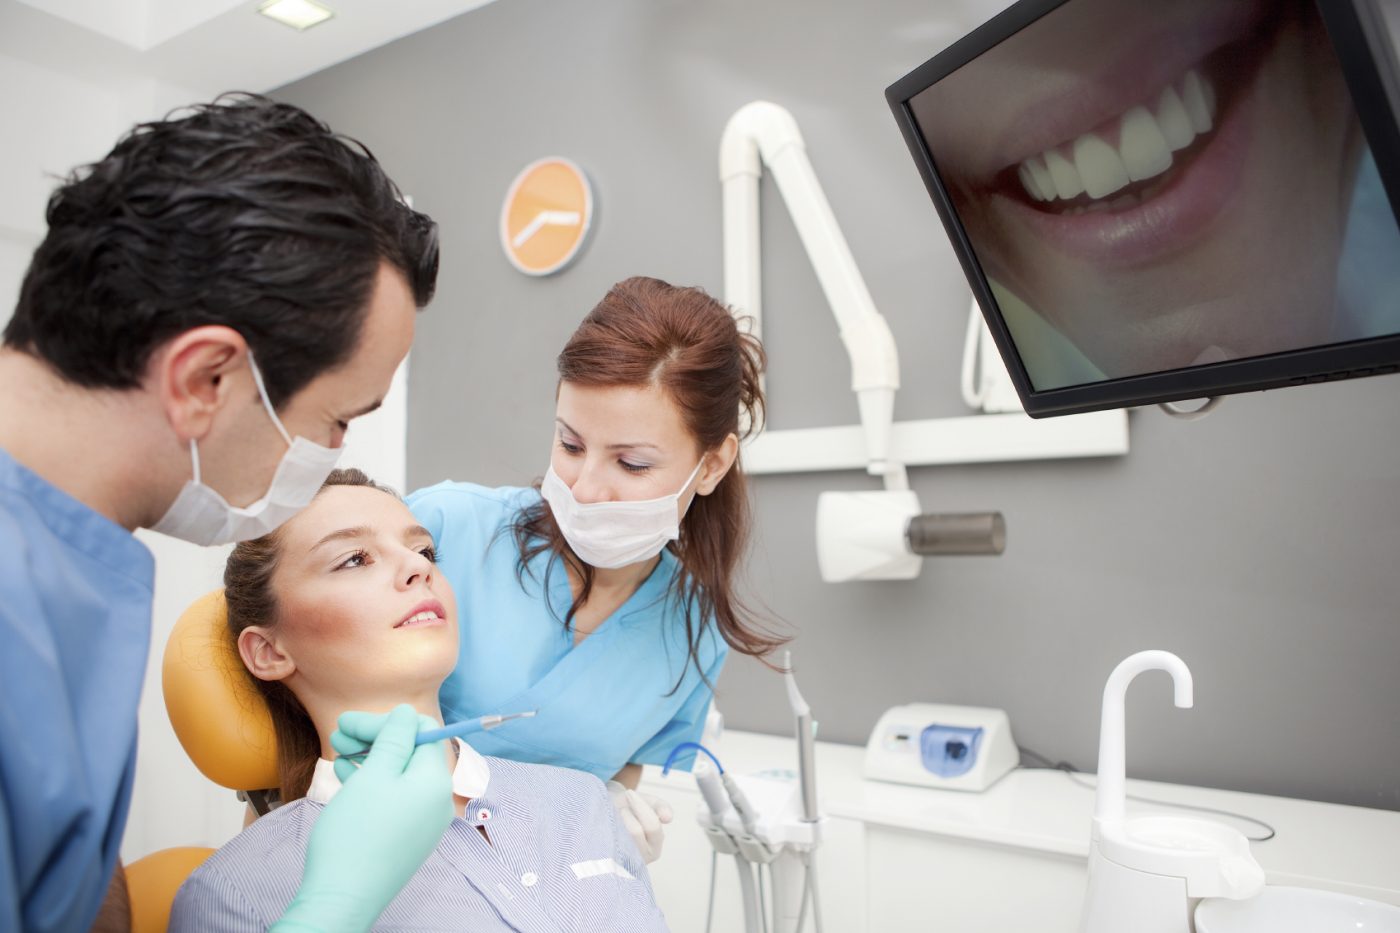 Стоматология практика врачи. Консультация стоматолога. Зубы стоматолог. Стоматологические картинки. Стоматологические процедуры.